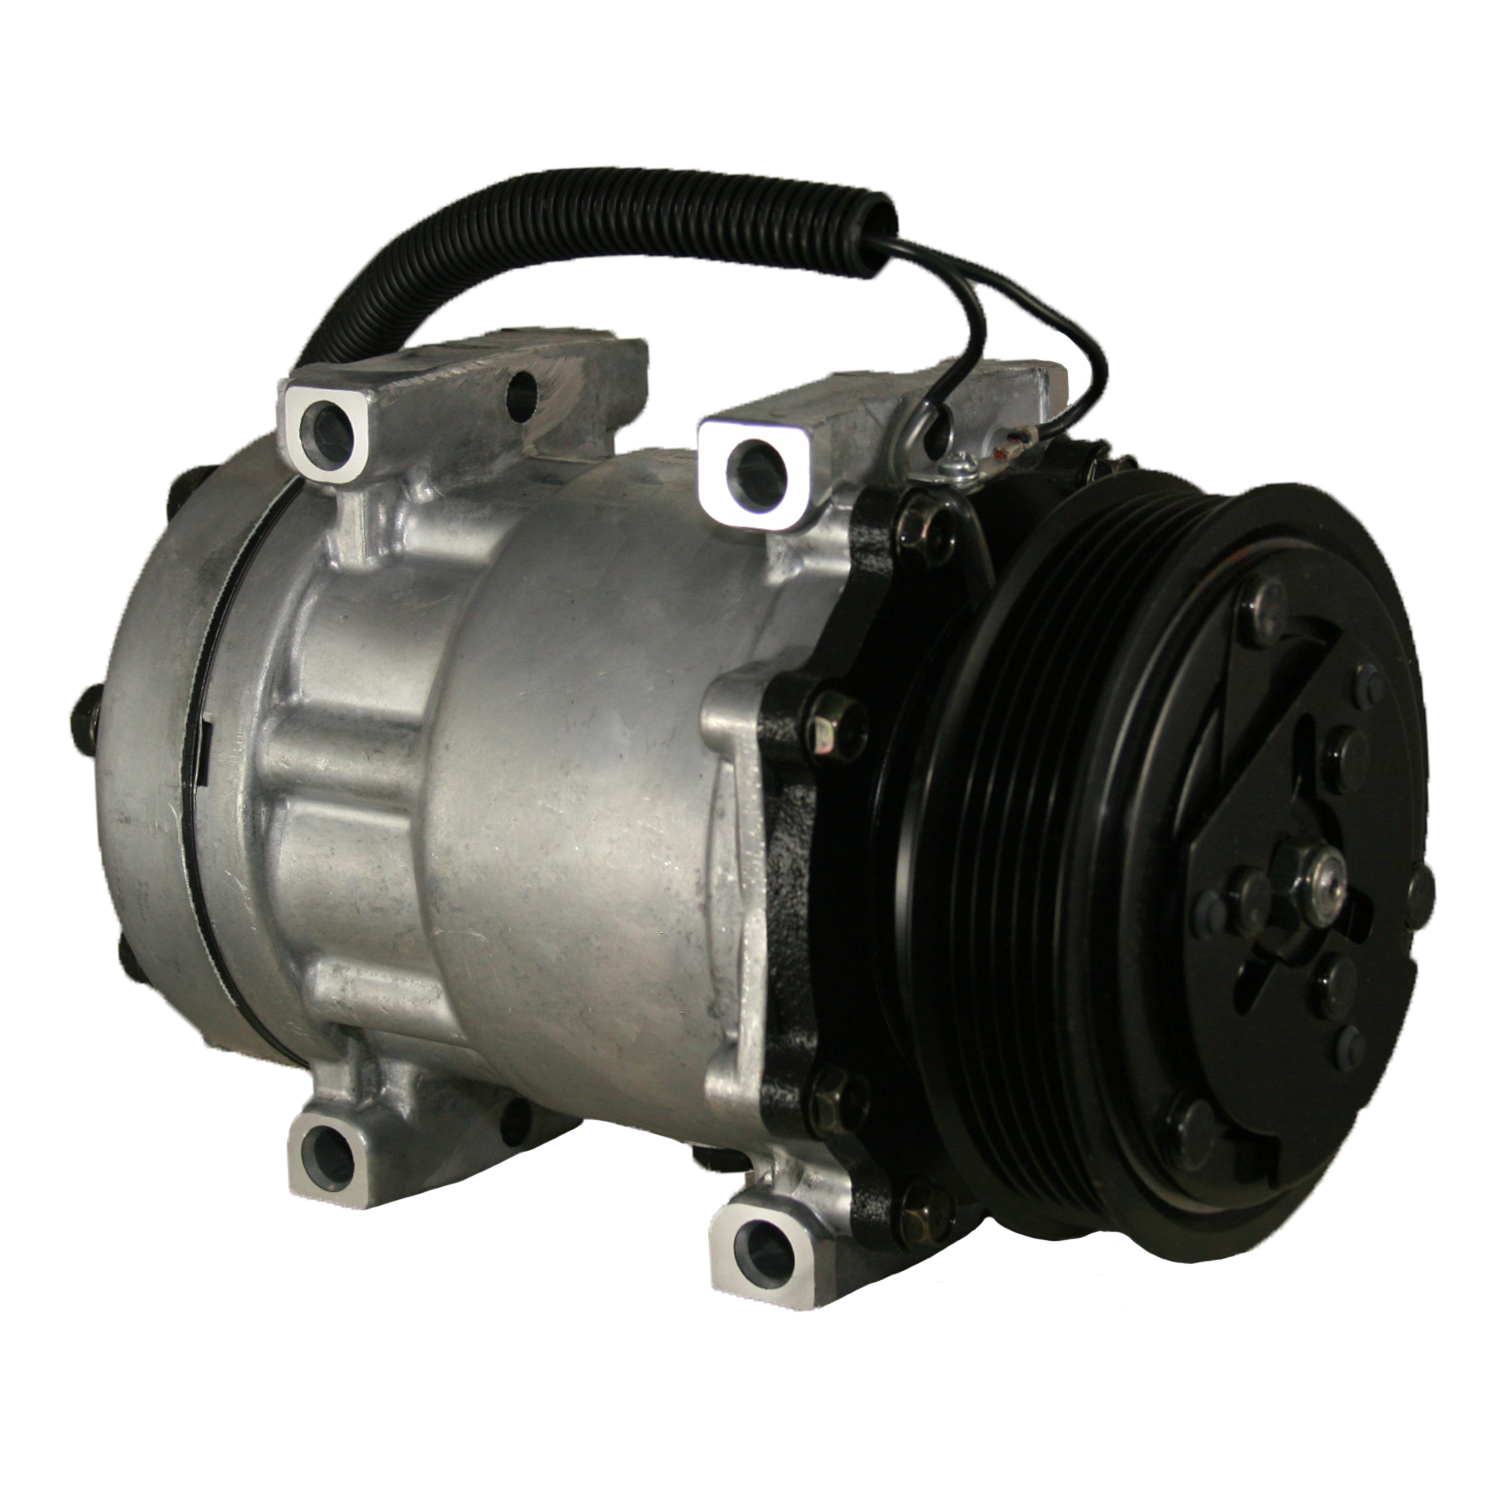 TCW Compressor 40572.601NEW New Product Image field_60b6a13a6e67c